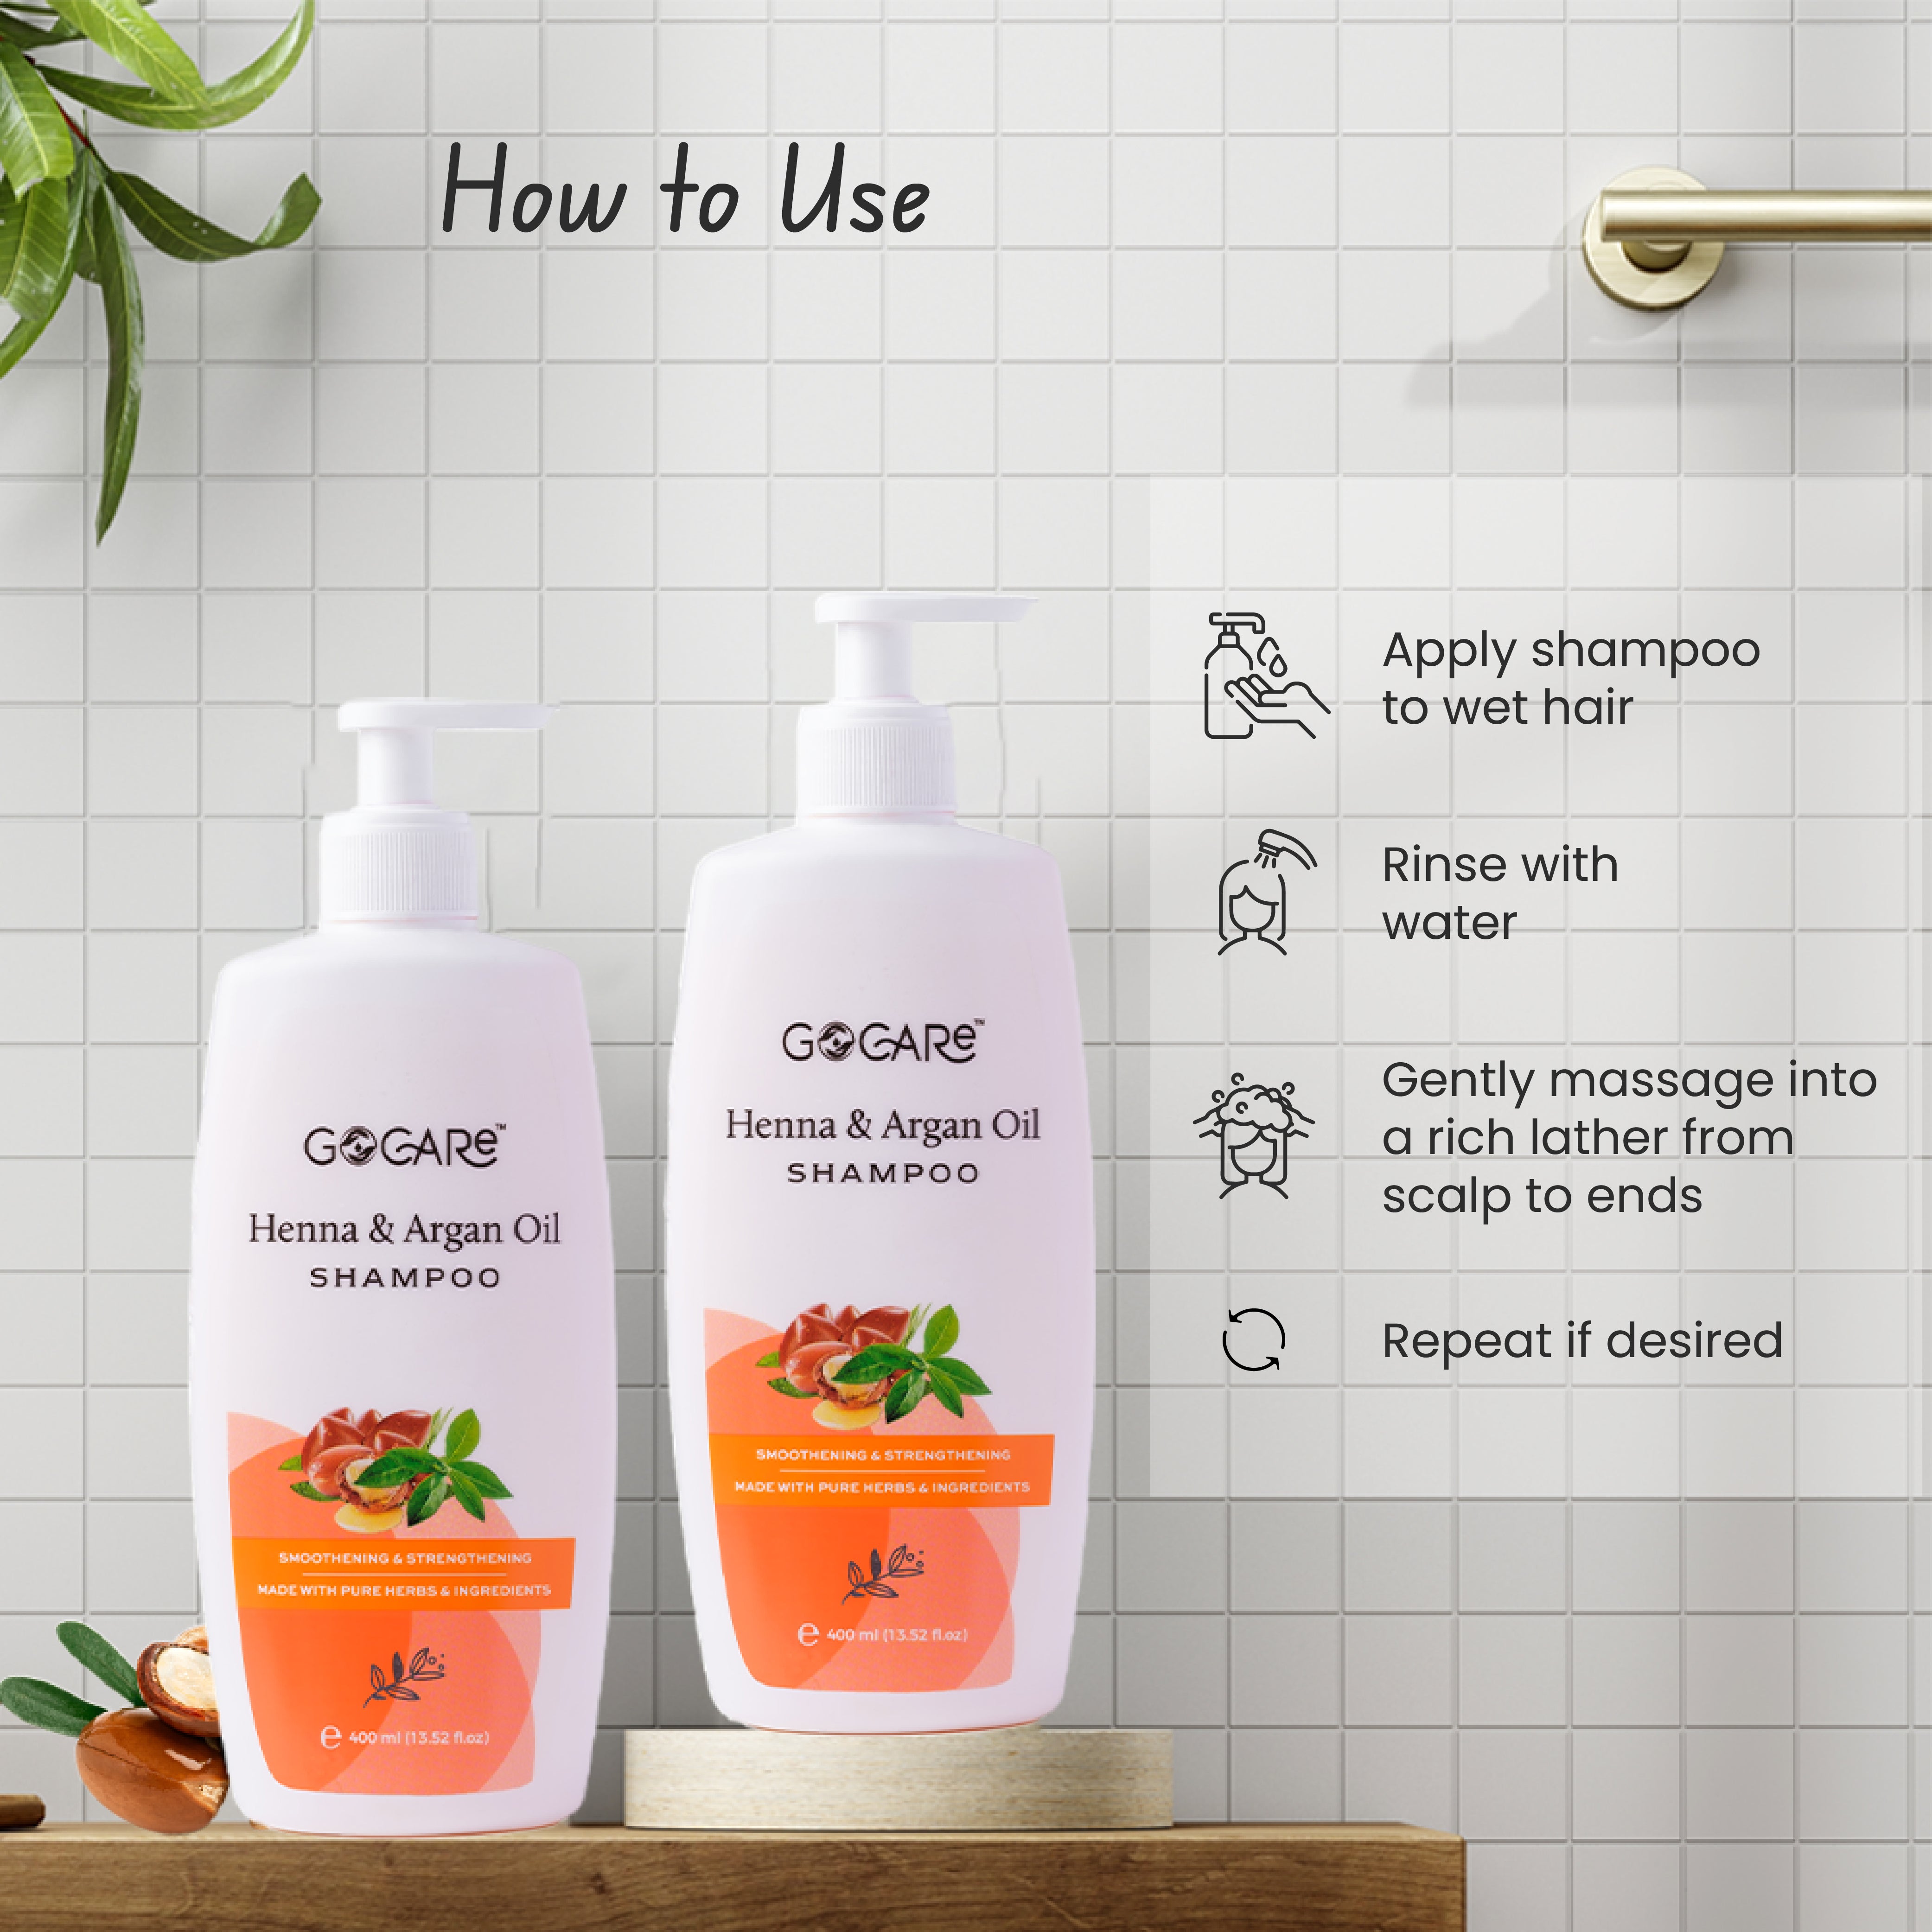 Henna & Argan Oil Smoothening & Strengthening Shampoo